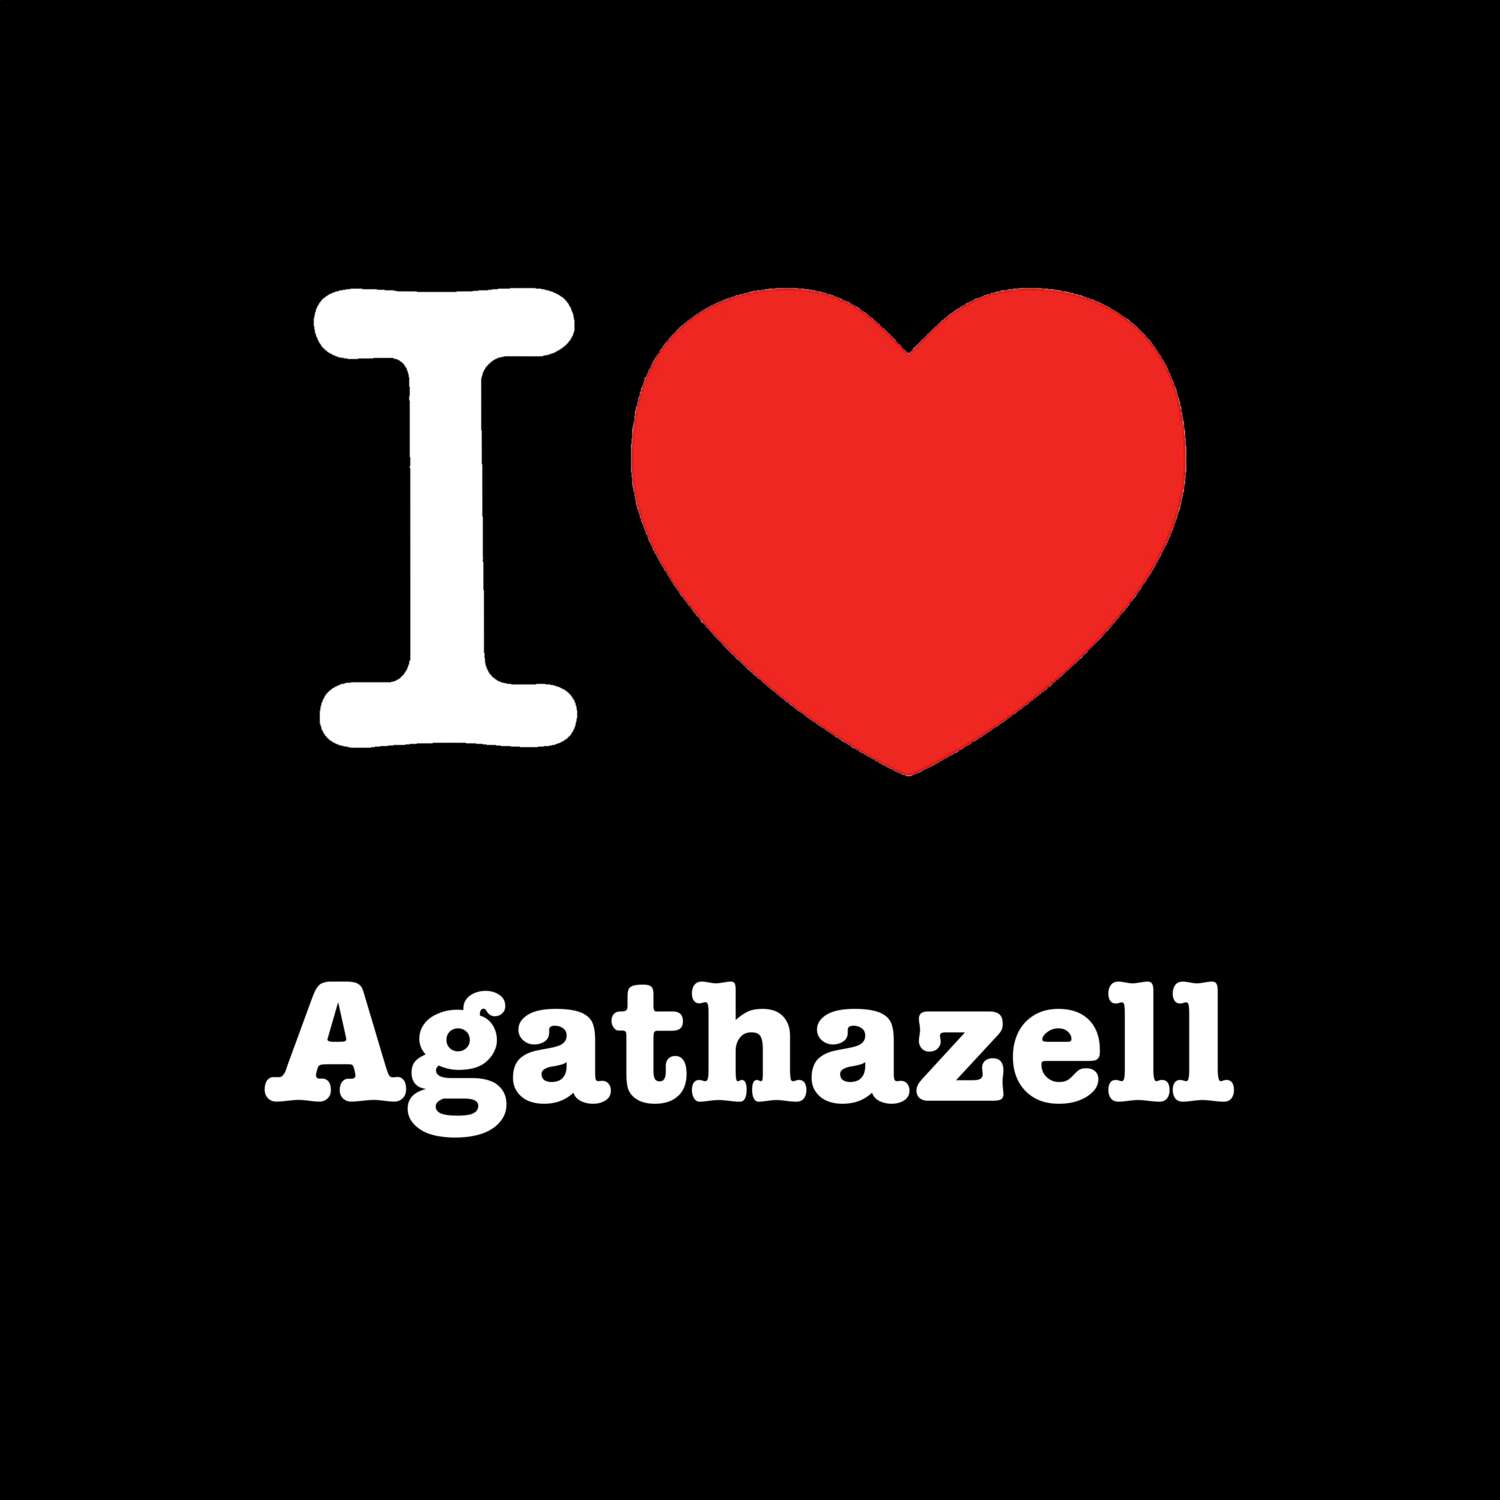 Agathazell T-Shirt »I love«